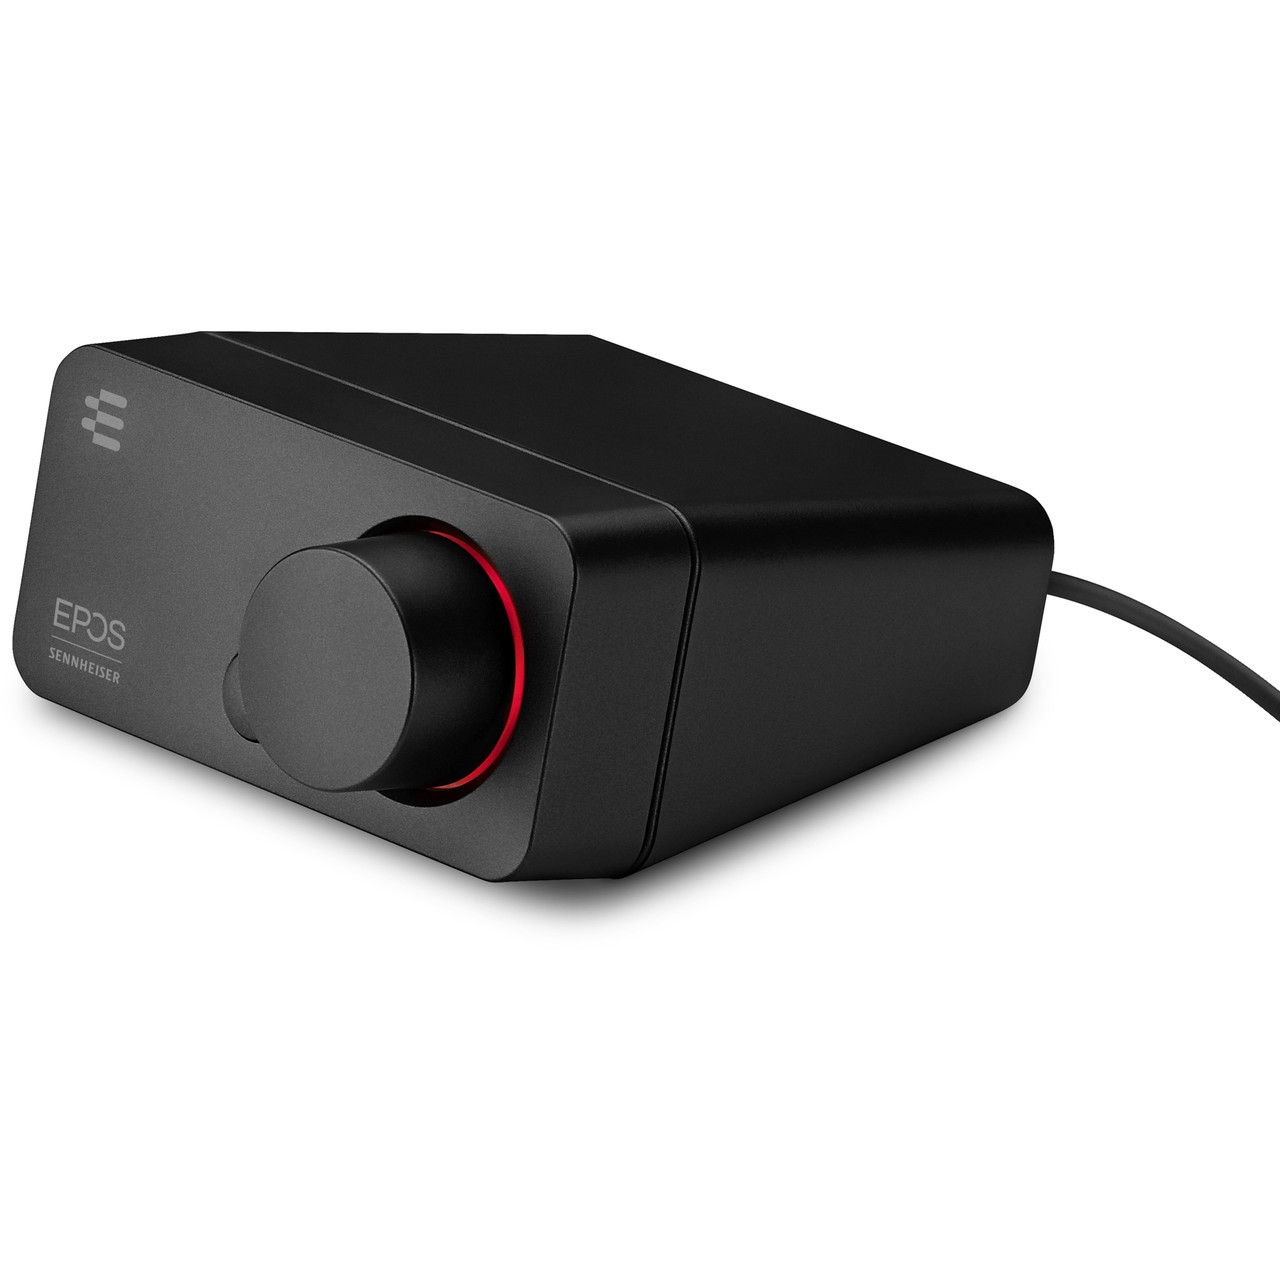 EPOS | SENNHEISER GSX 300 External USB Sound Card - 1000201